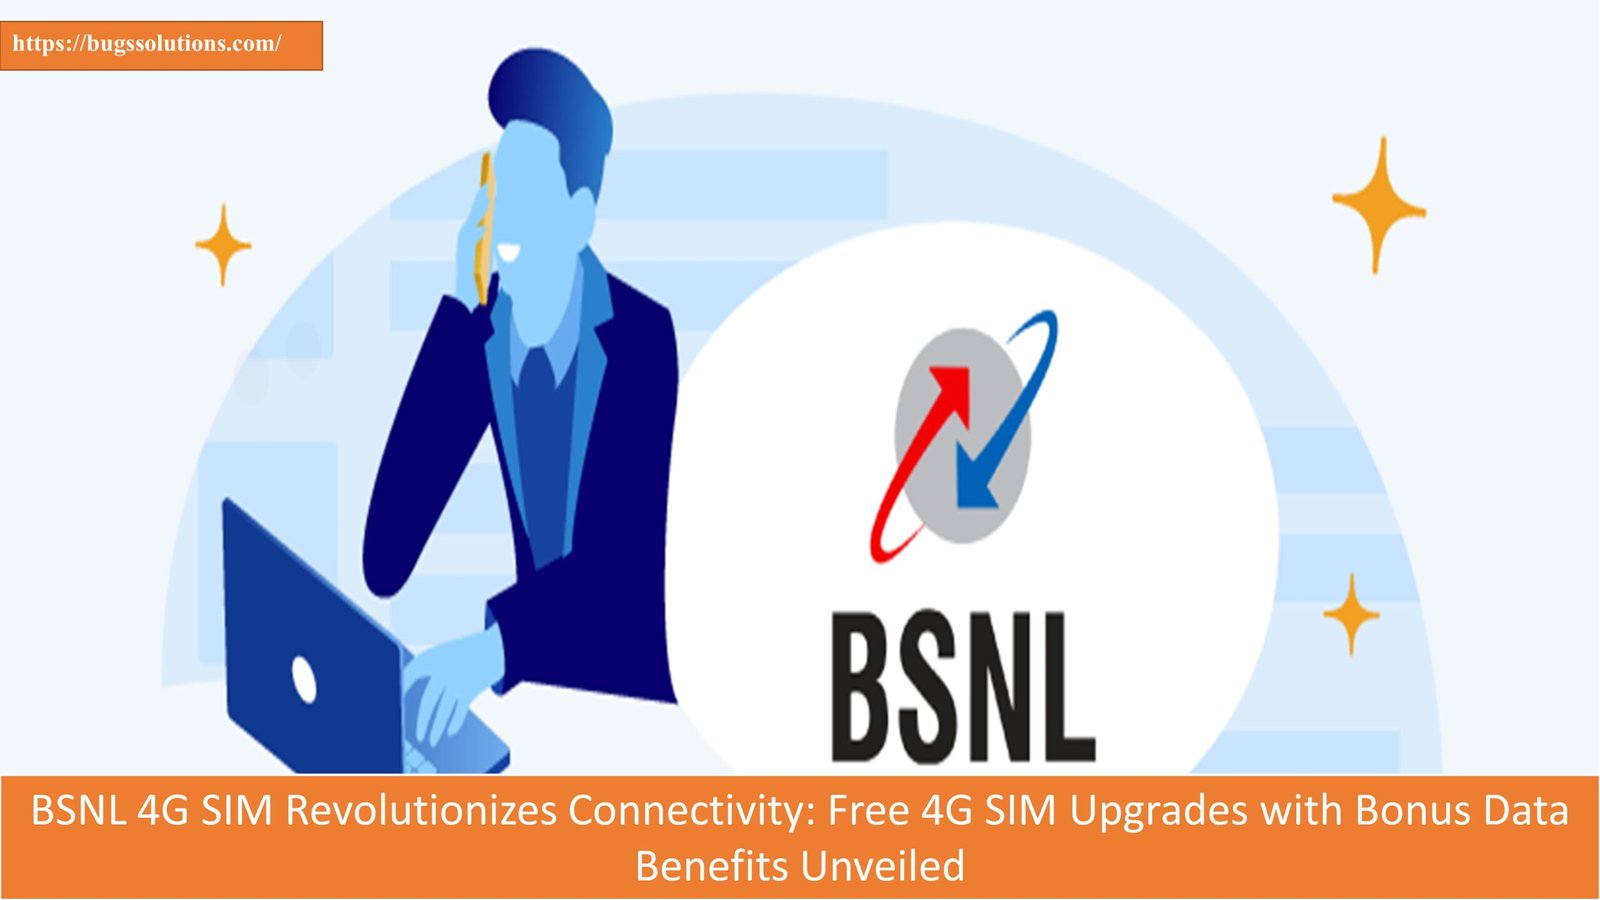 BSNL 4G SIM Revolutionizes Connectivity: Free 4G SIM Upgrades with Bonus Data Benefits Unveiled